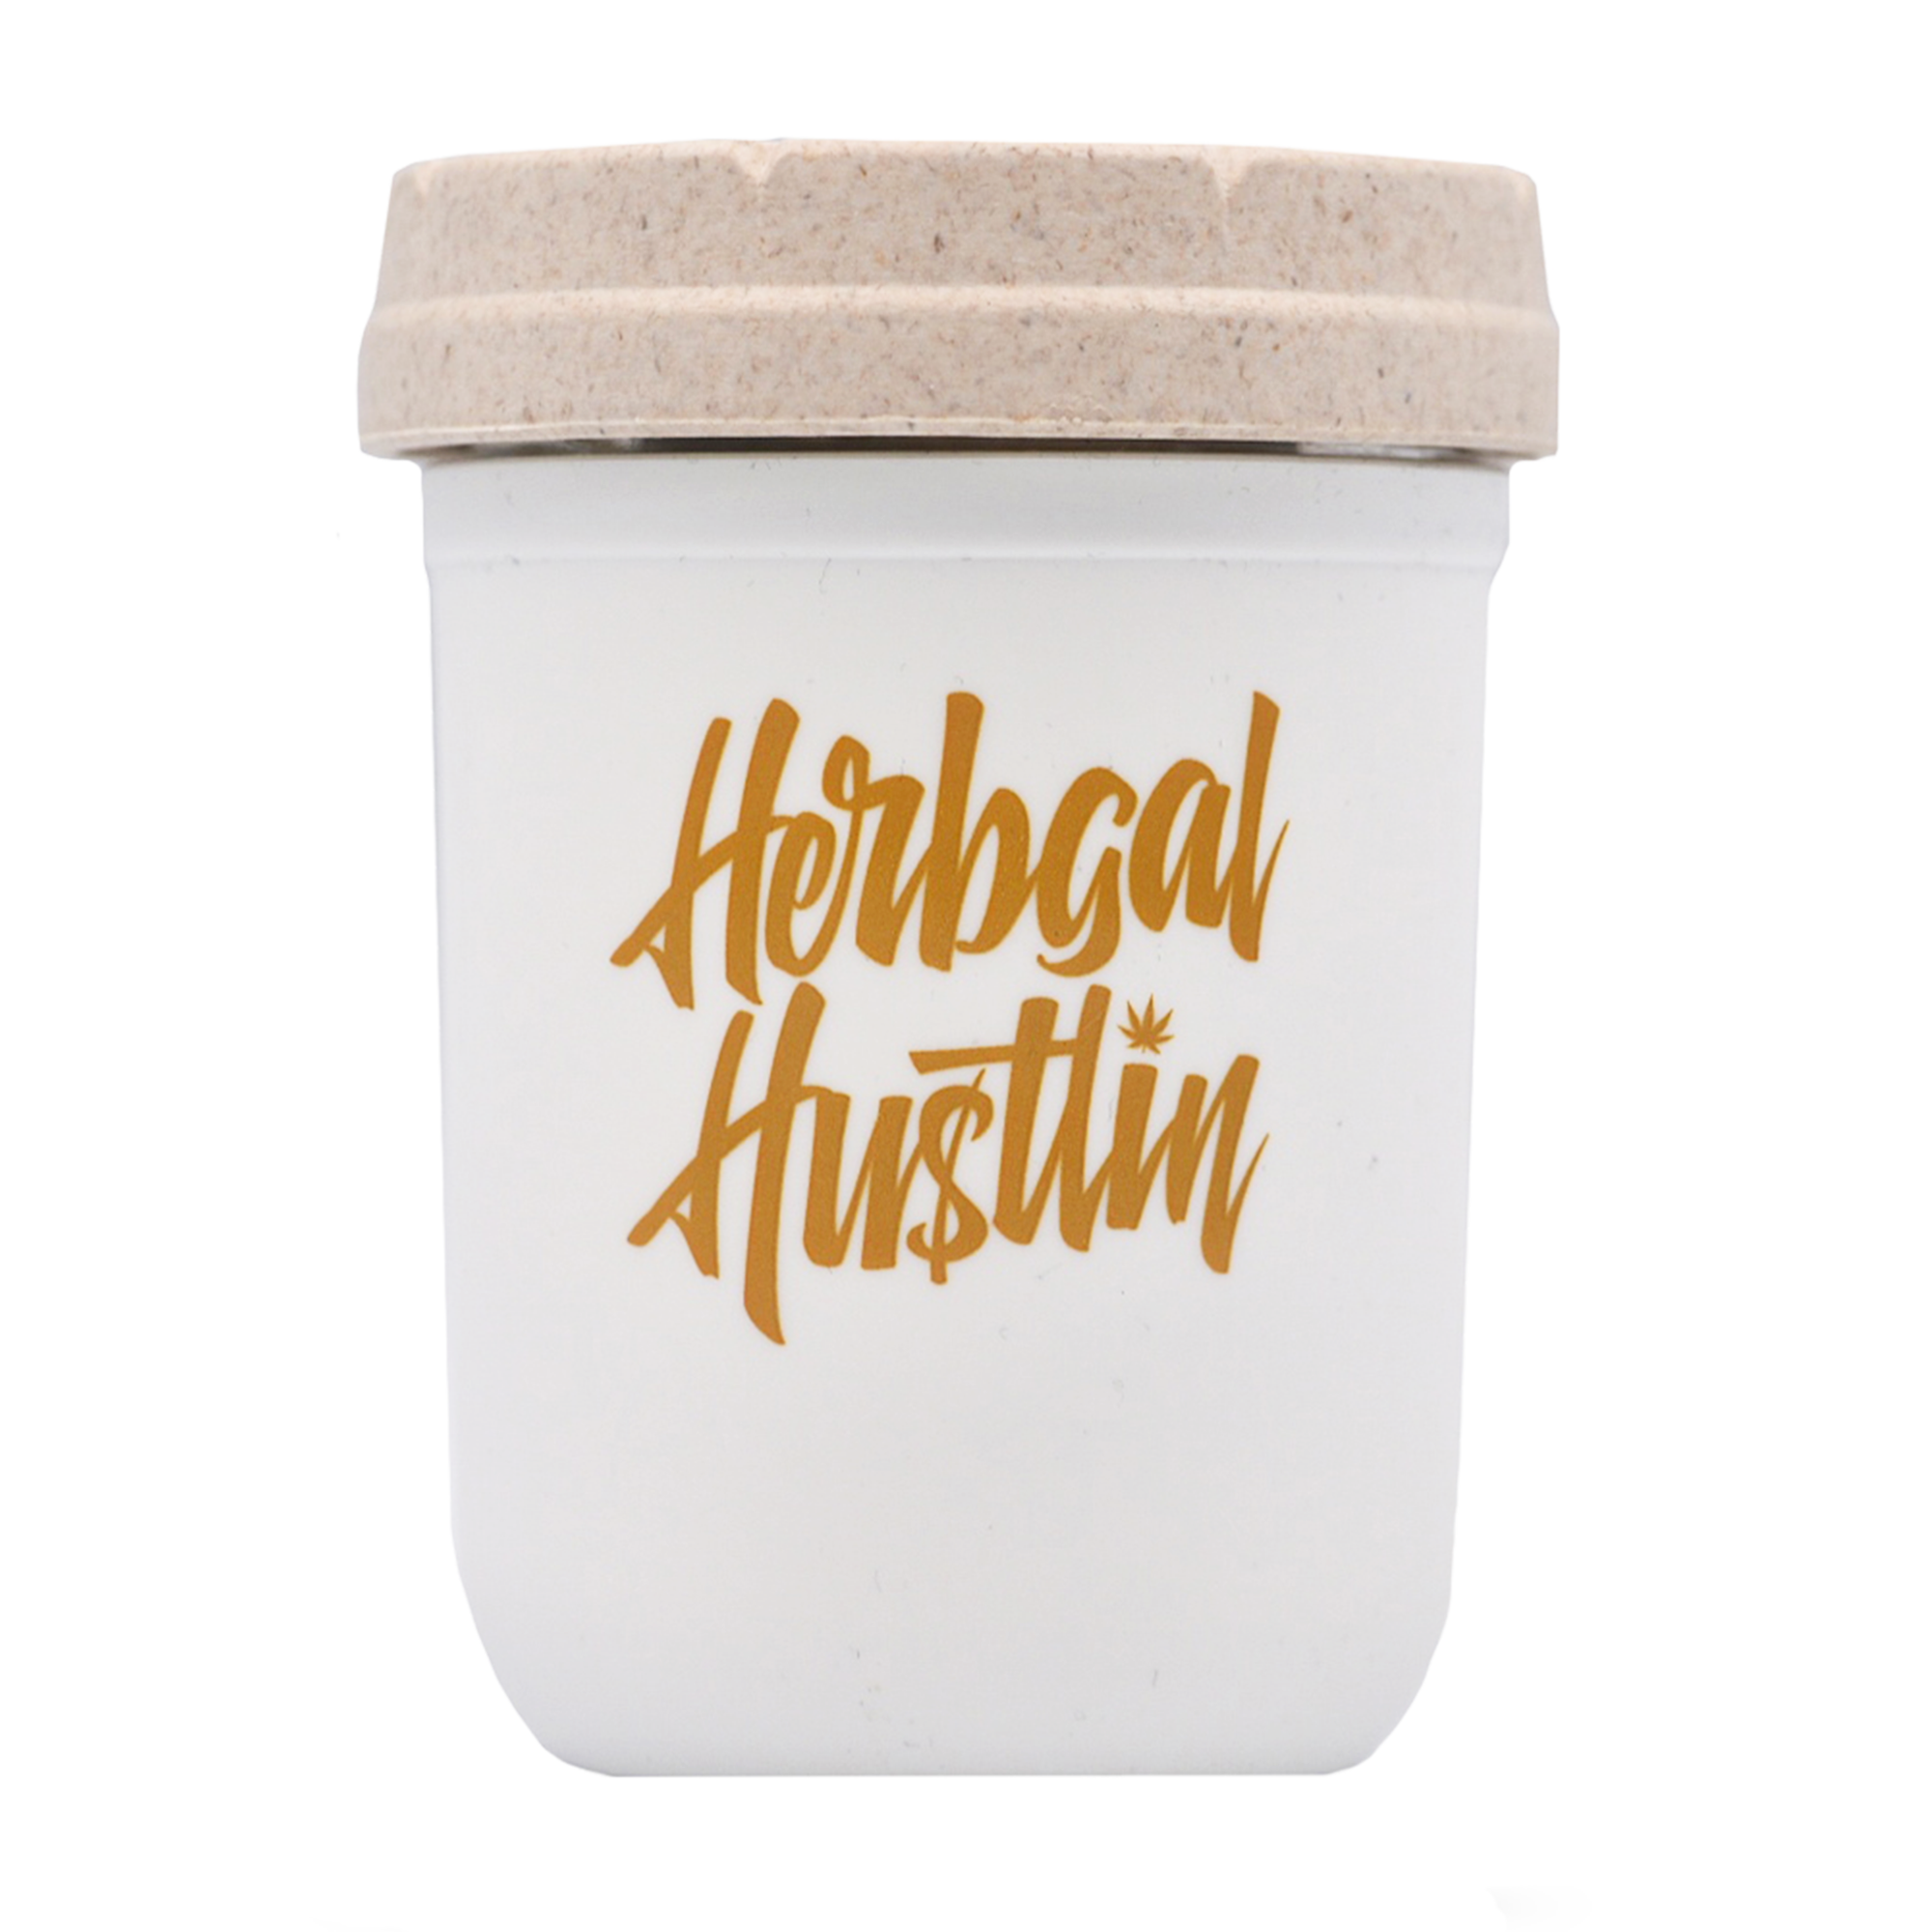 Herbgal Hustlin 8oz Re-Stash Jar - White/Gold - Boveda Pack Included